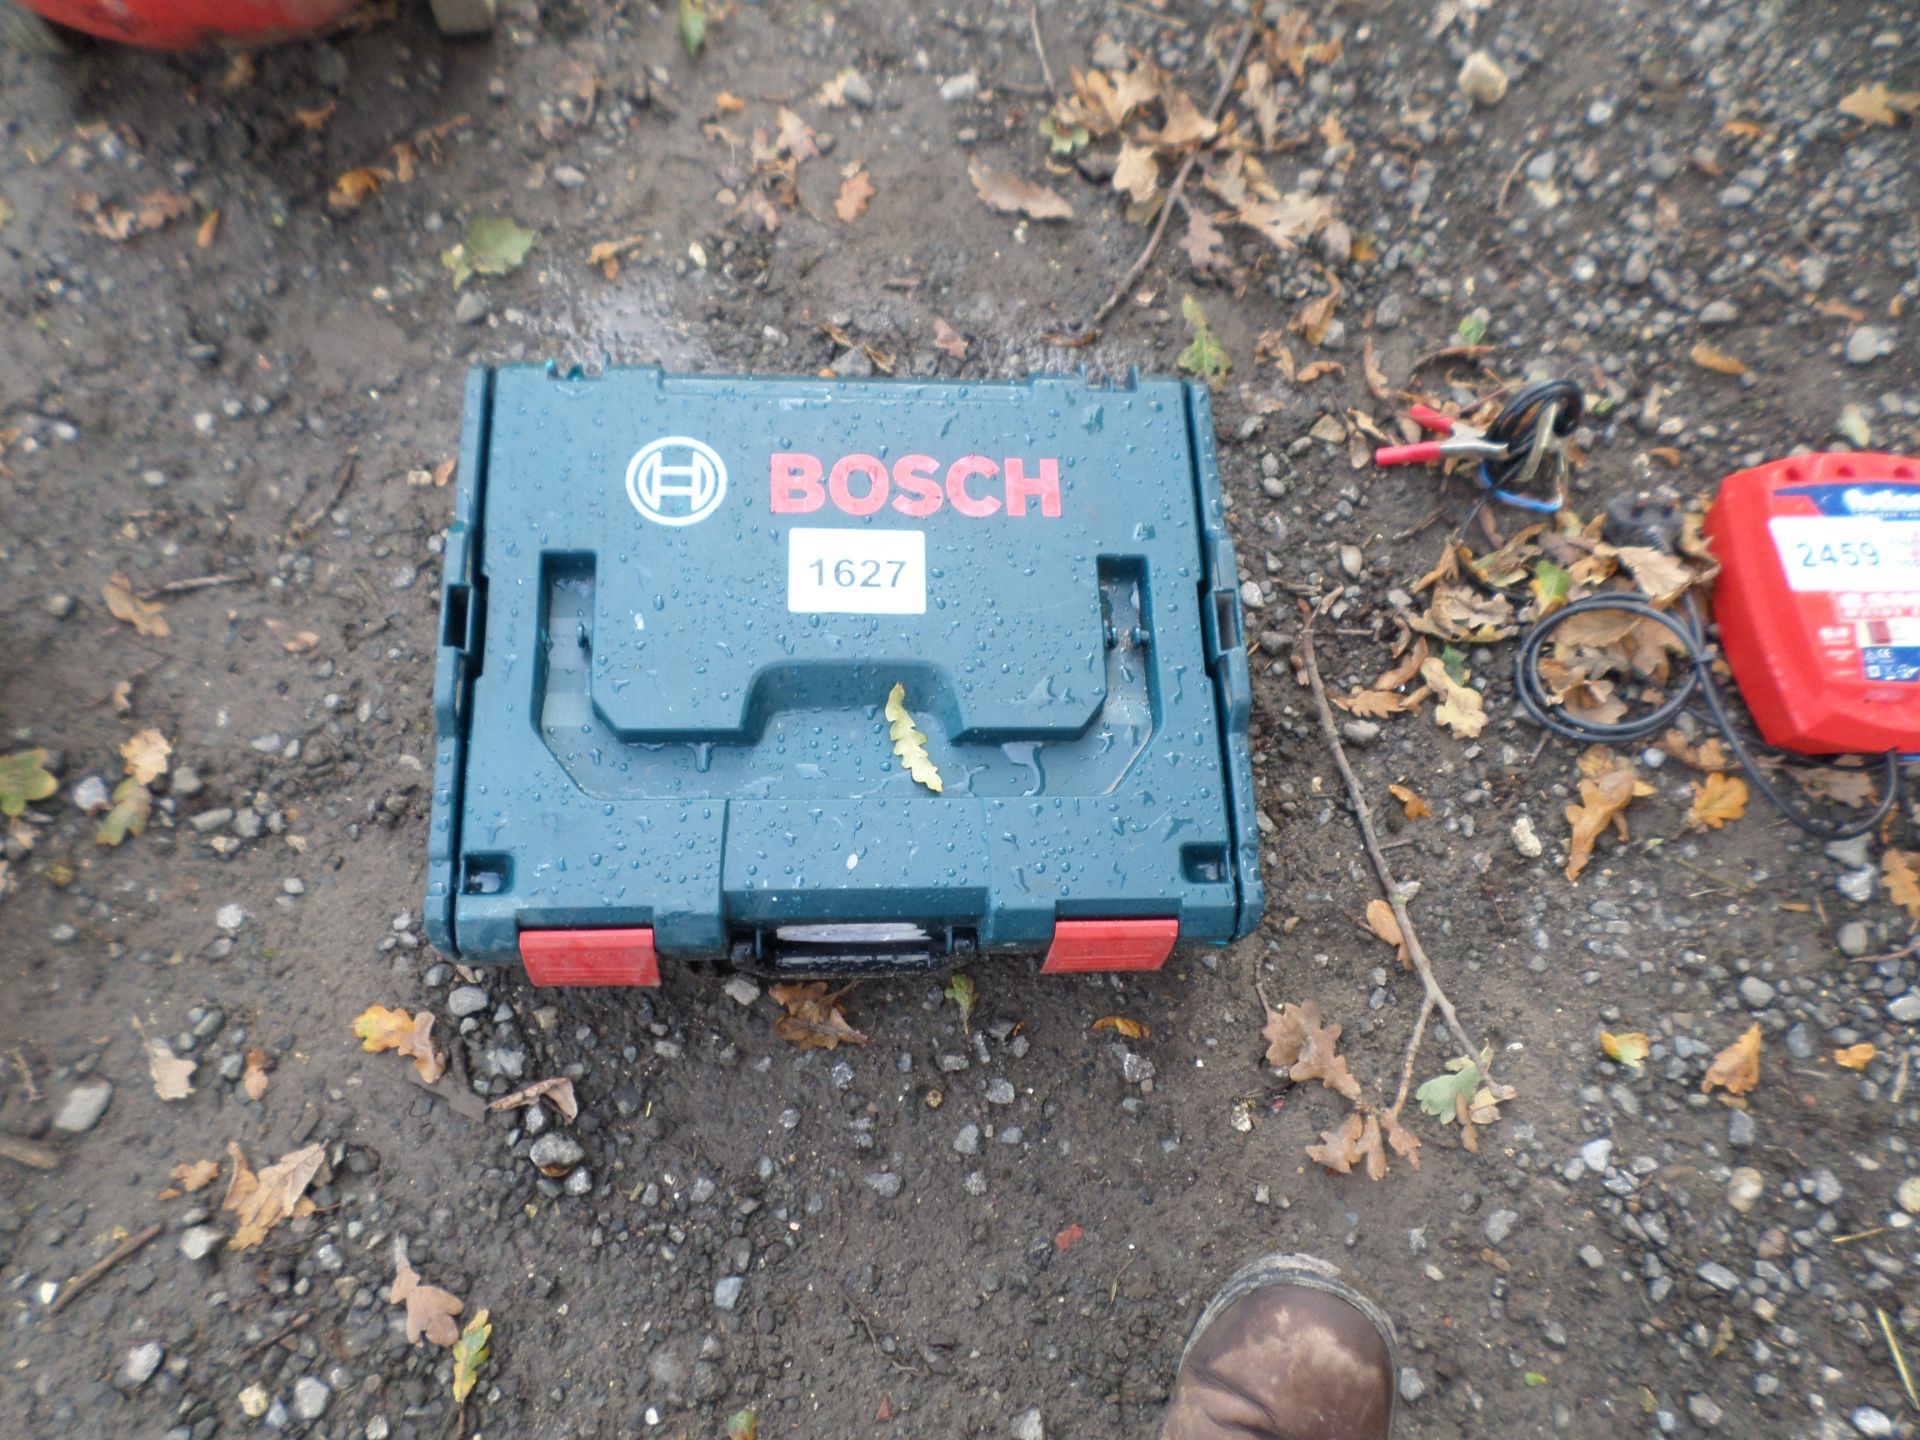 Bosch rechargeable impact gun NO VAT - Image 2 of 2